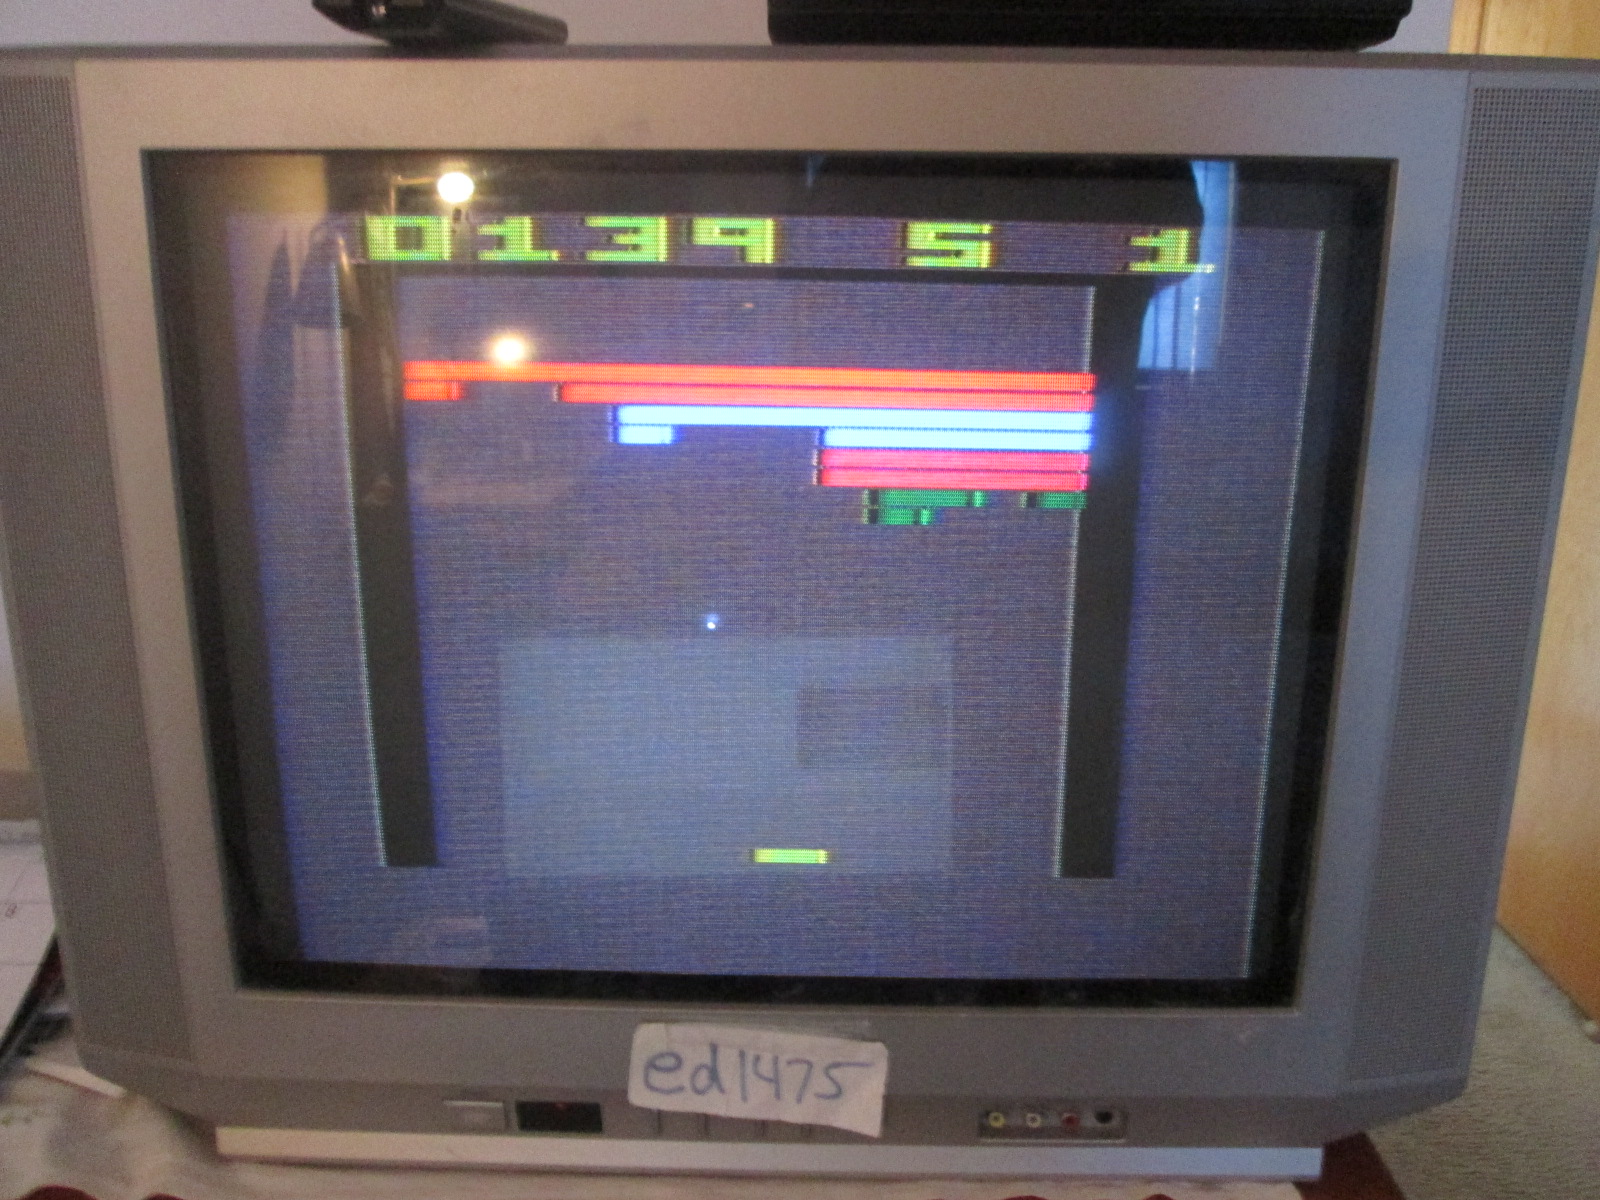 ed1475: Super Breakout (Atari 2600 Novice/B) 139 points on 2016-10-19 17:58:42